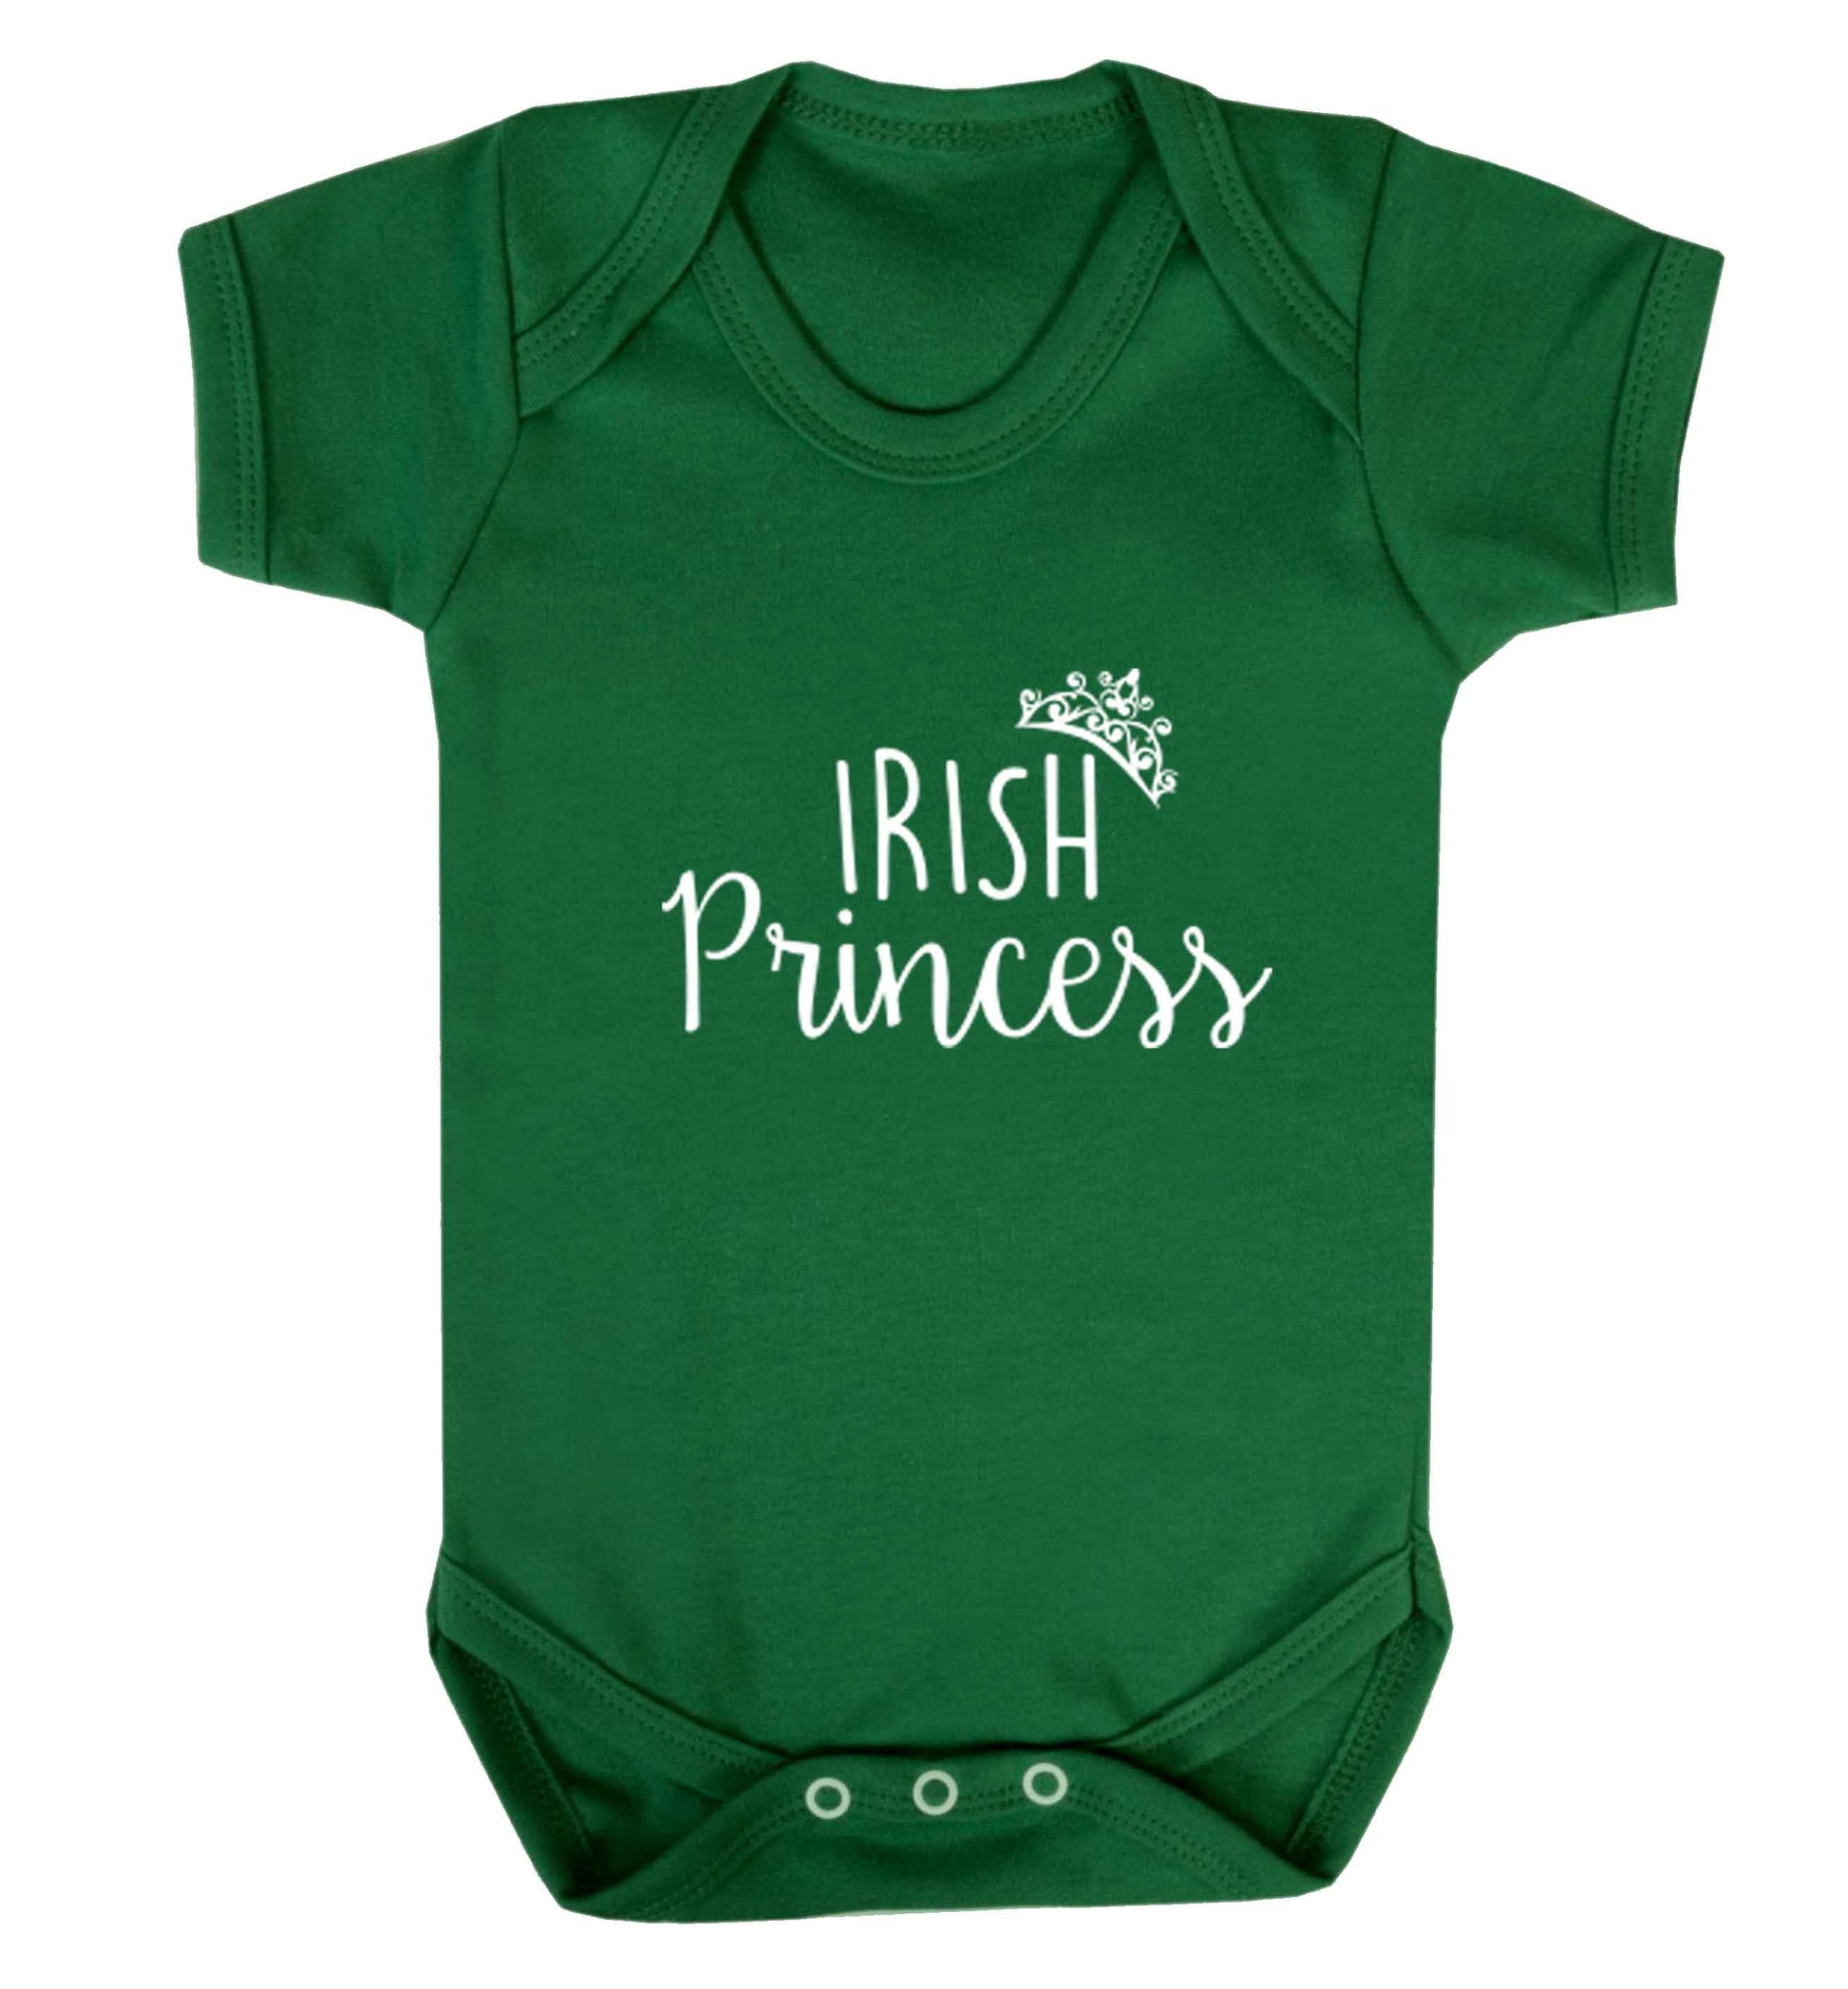 Irish princess baby vest green 18-24 months